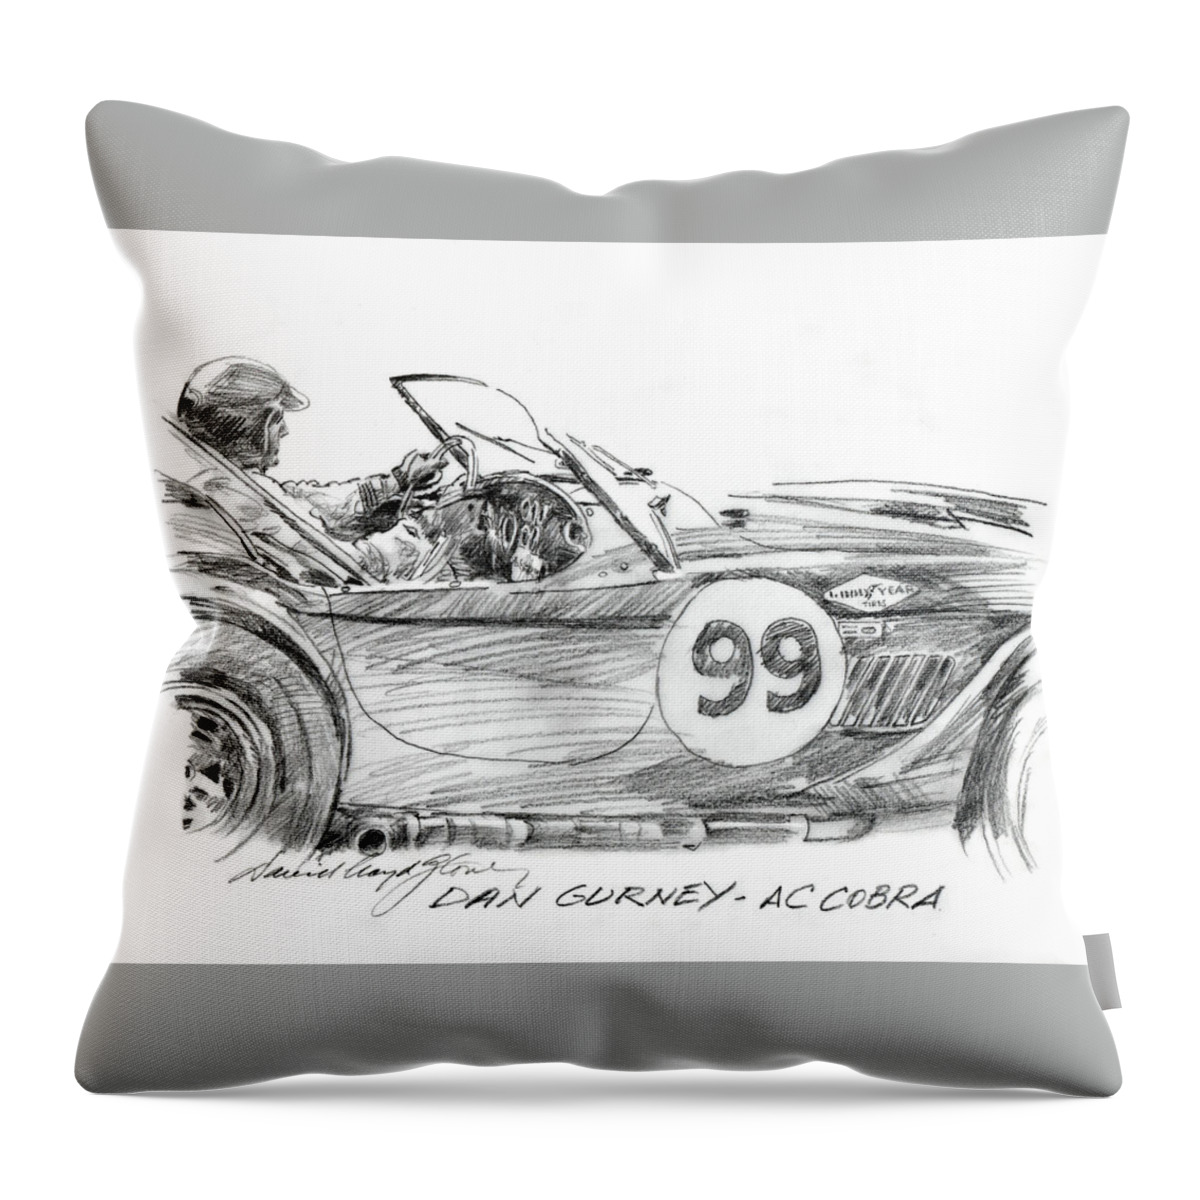 Ac Cobra Throw Pillow featuring the painting Dan Gurney Racing Ac Cobra 289 by David Lloyd Glover